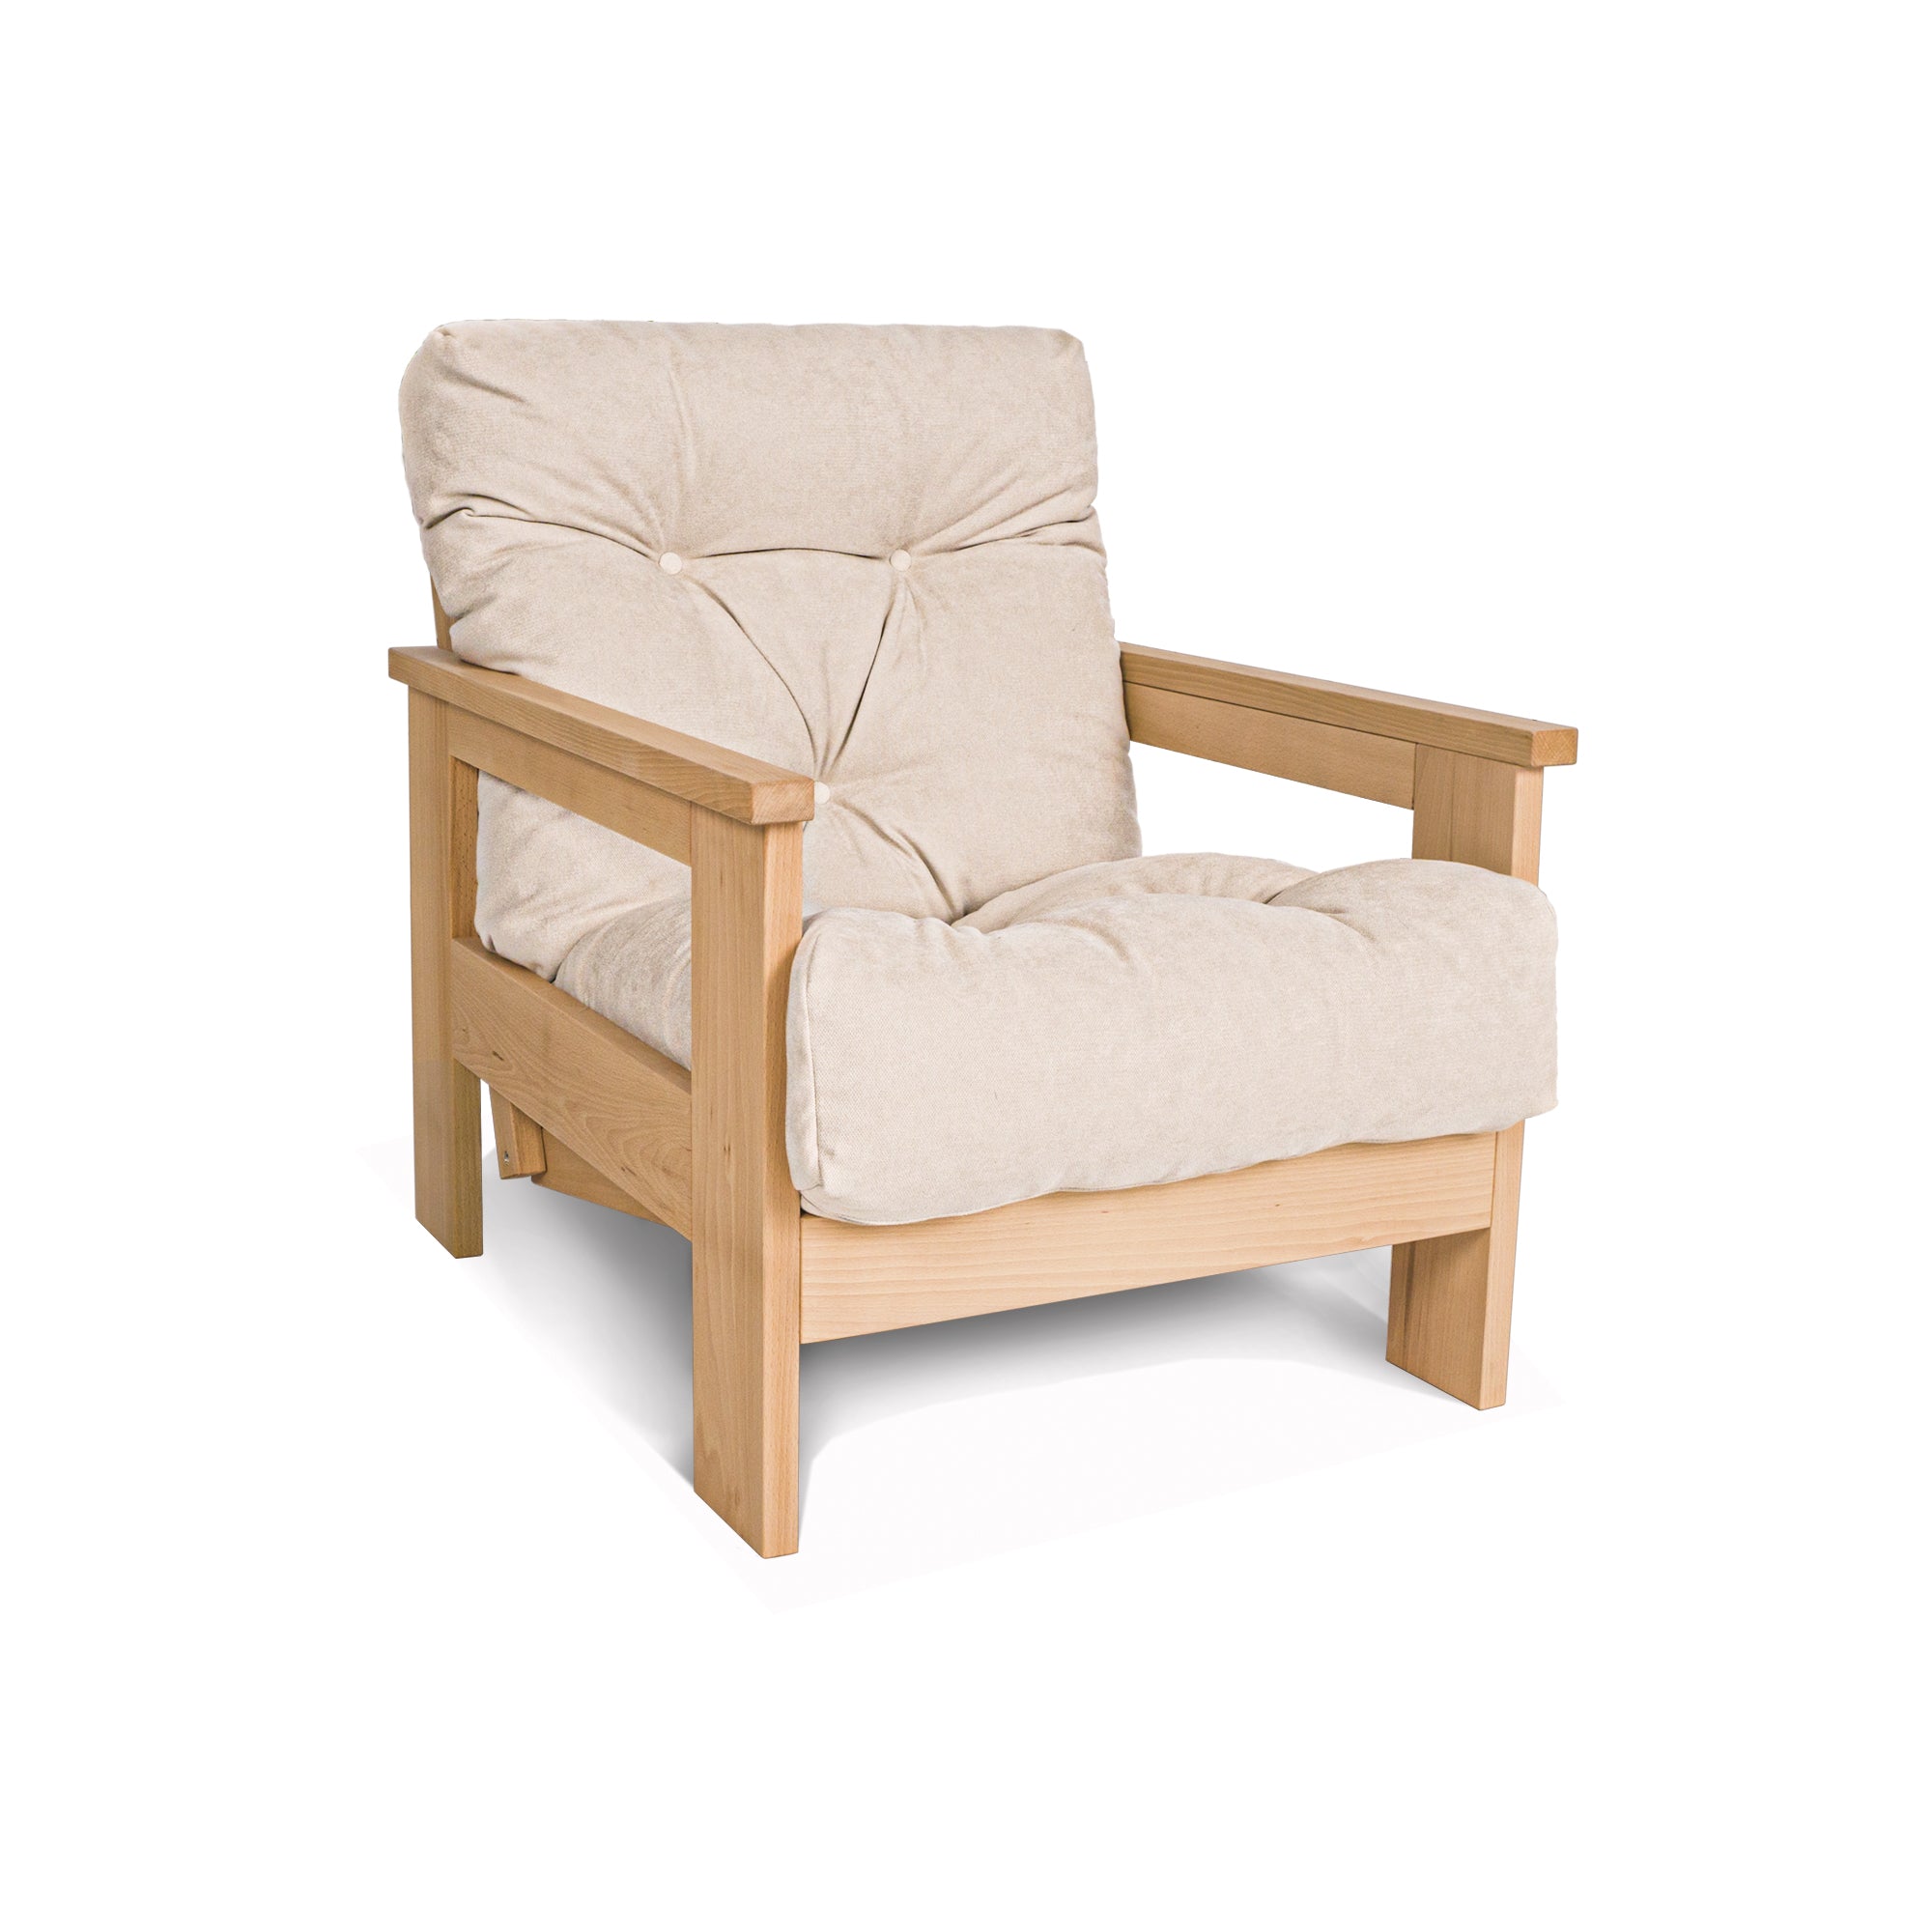 MEXICO Armchair, Beech Wood Frame, Natural Colour-creamy fabric